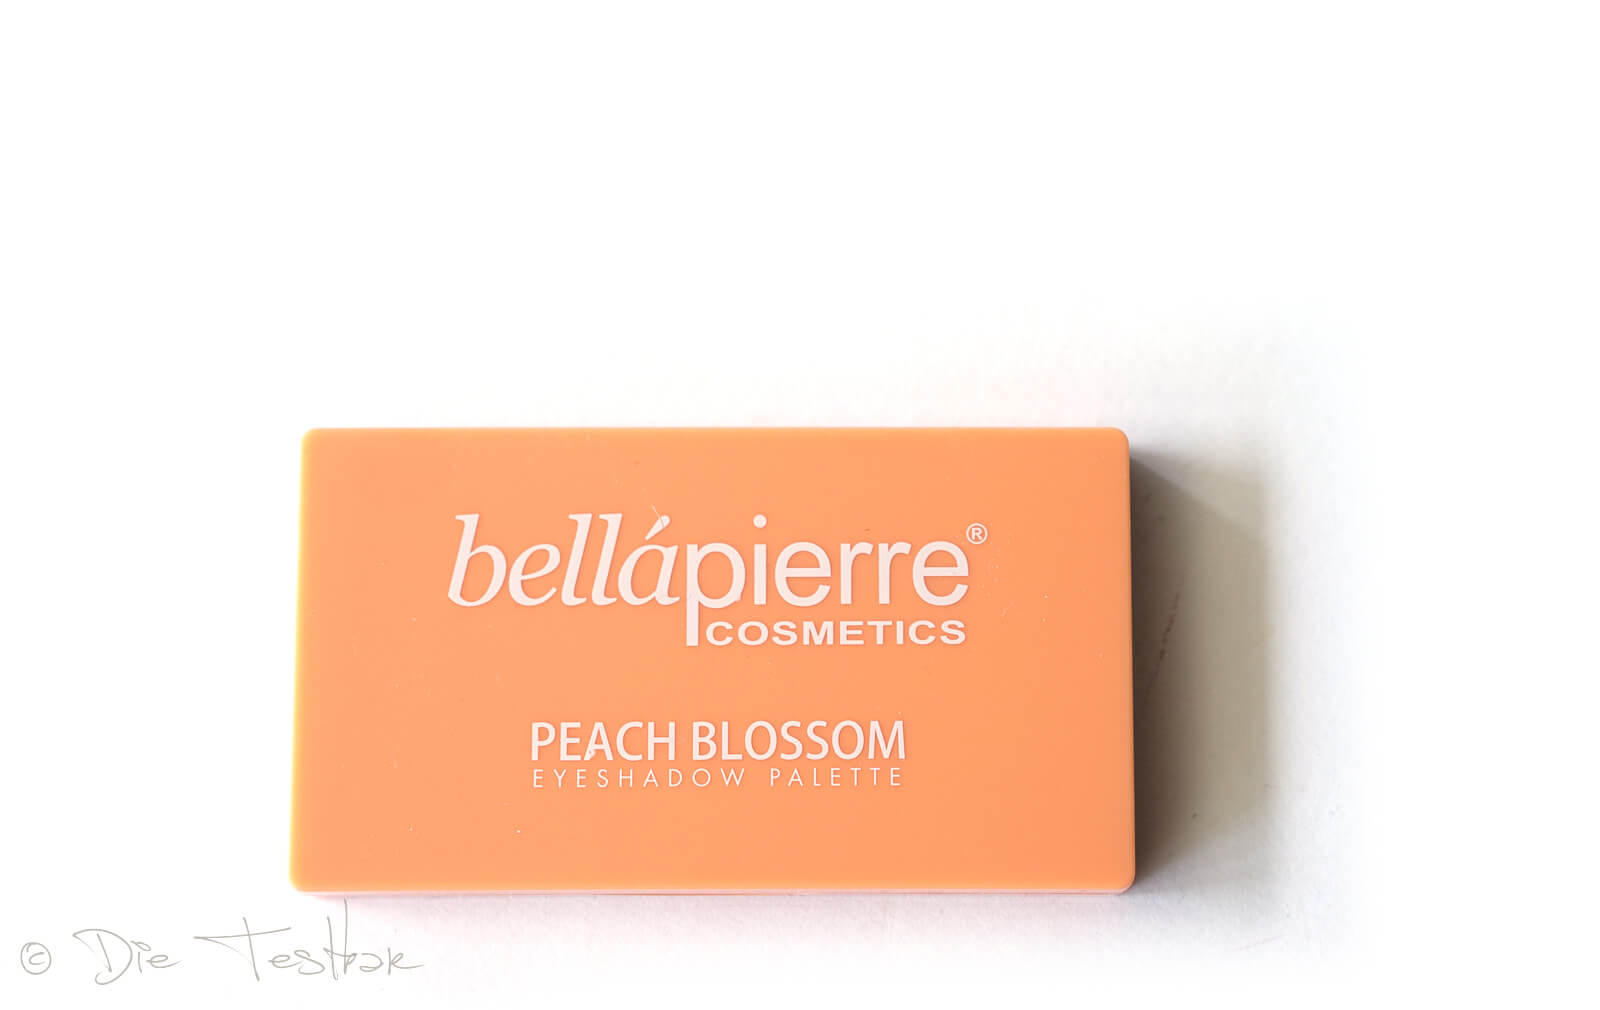 bellápierre cosmetics - Eyeshadow Palette Peach Blossom